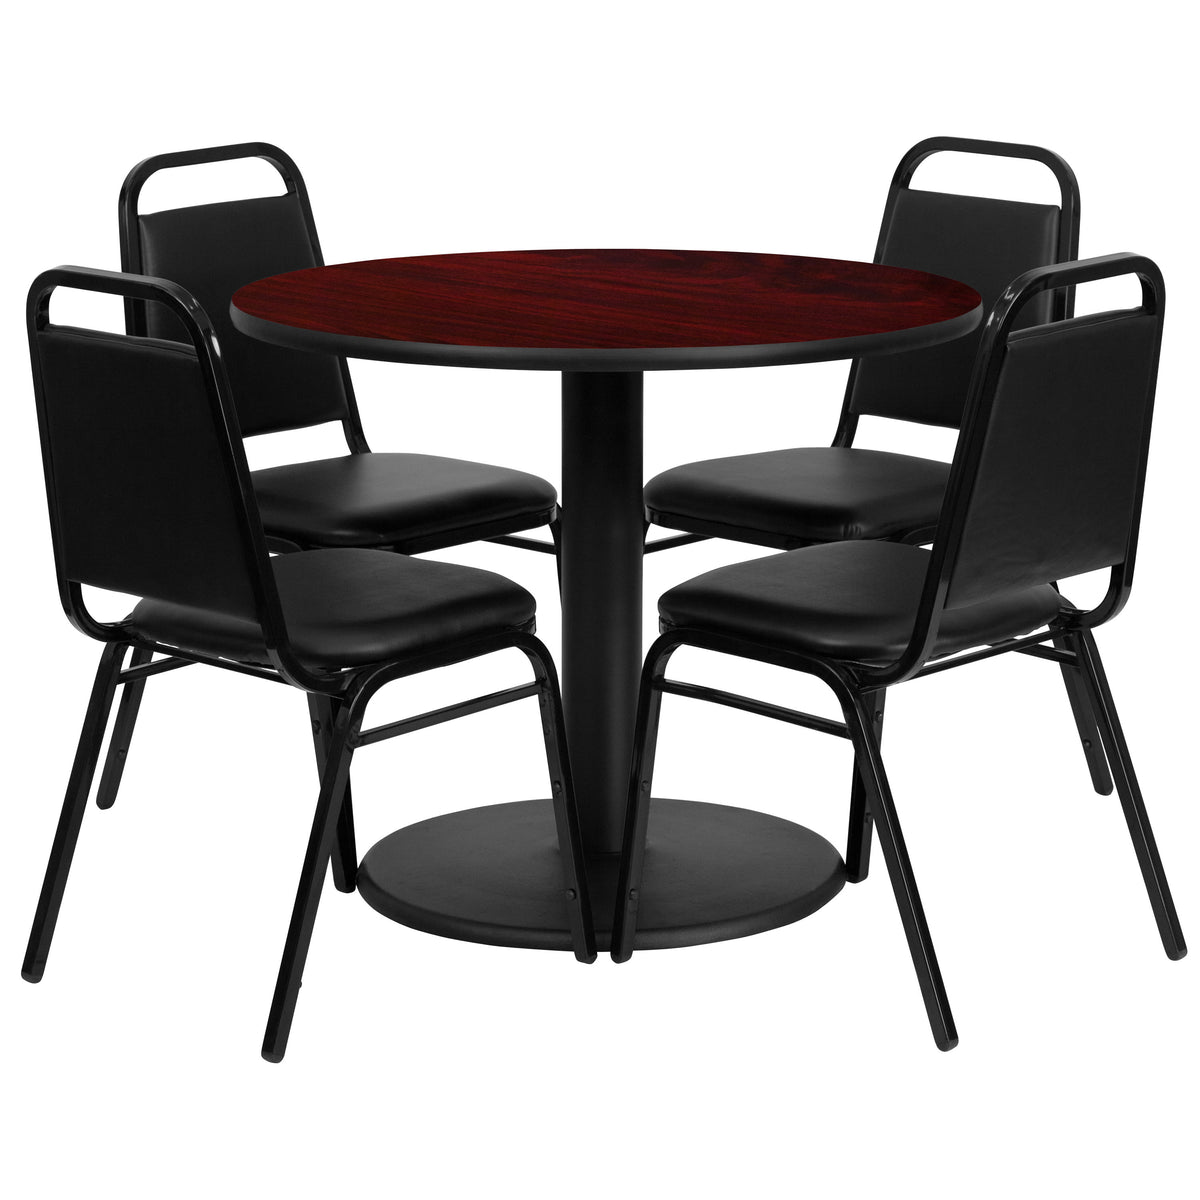 Mahogany Top/Black Vinyl Seat |#| 36inch Round Mahogany Laminate Table with Round Base and 4 Black Banquet Chairs